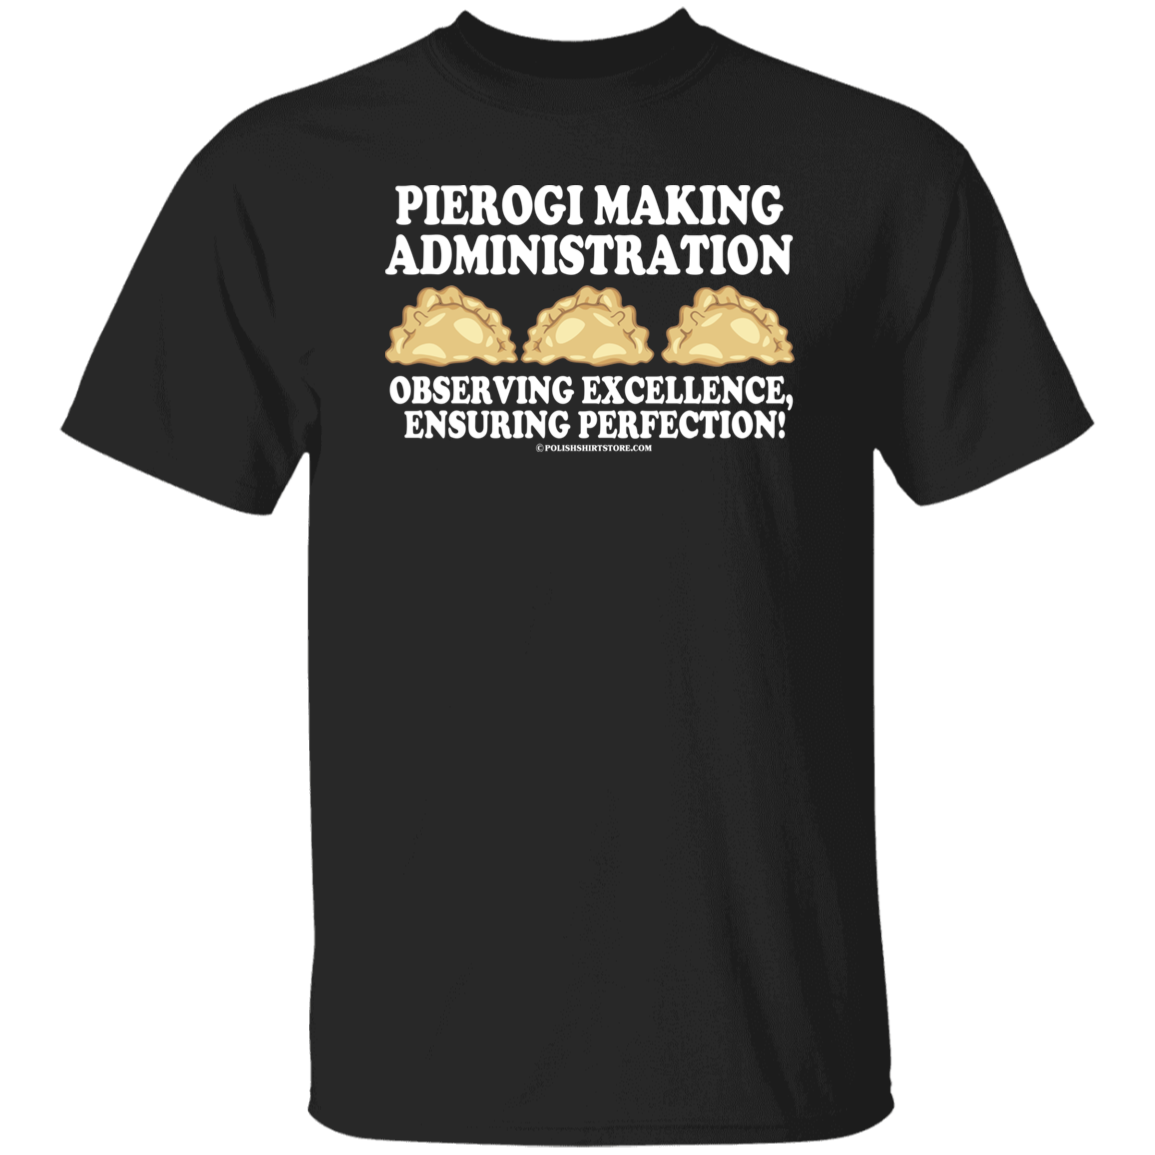 Pierogi Making Administration Observing Excellence Ensuring Perfection Apparel CustomCat G500 5.3 oz. T-Shirt Black S